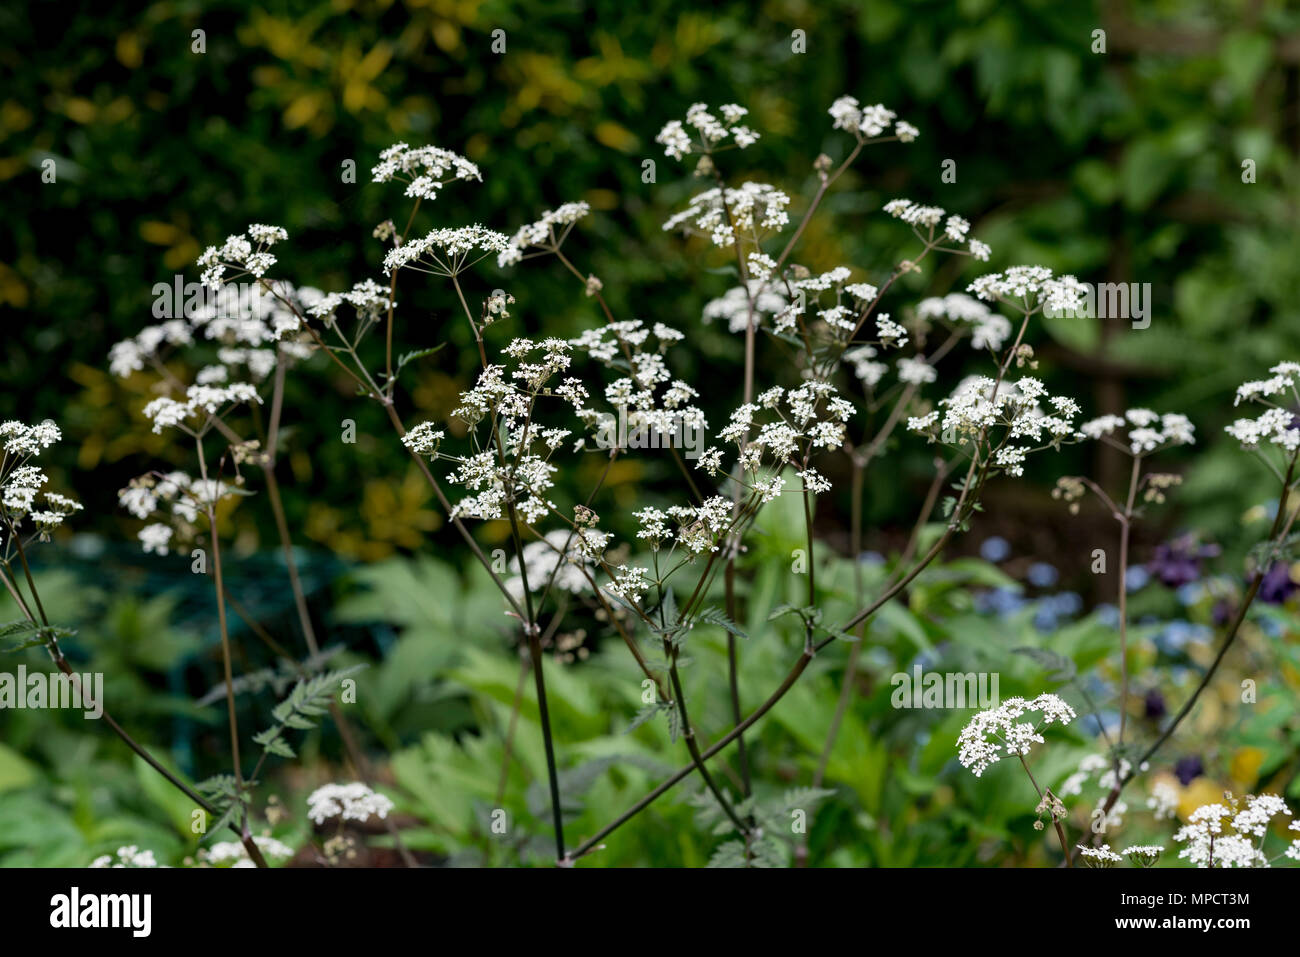 Anthriscus sylvestris  Ravenswing, apiaceae. Cow parsley, white flowers. Stock Photo